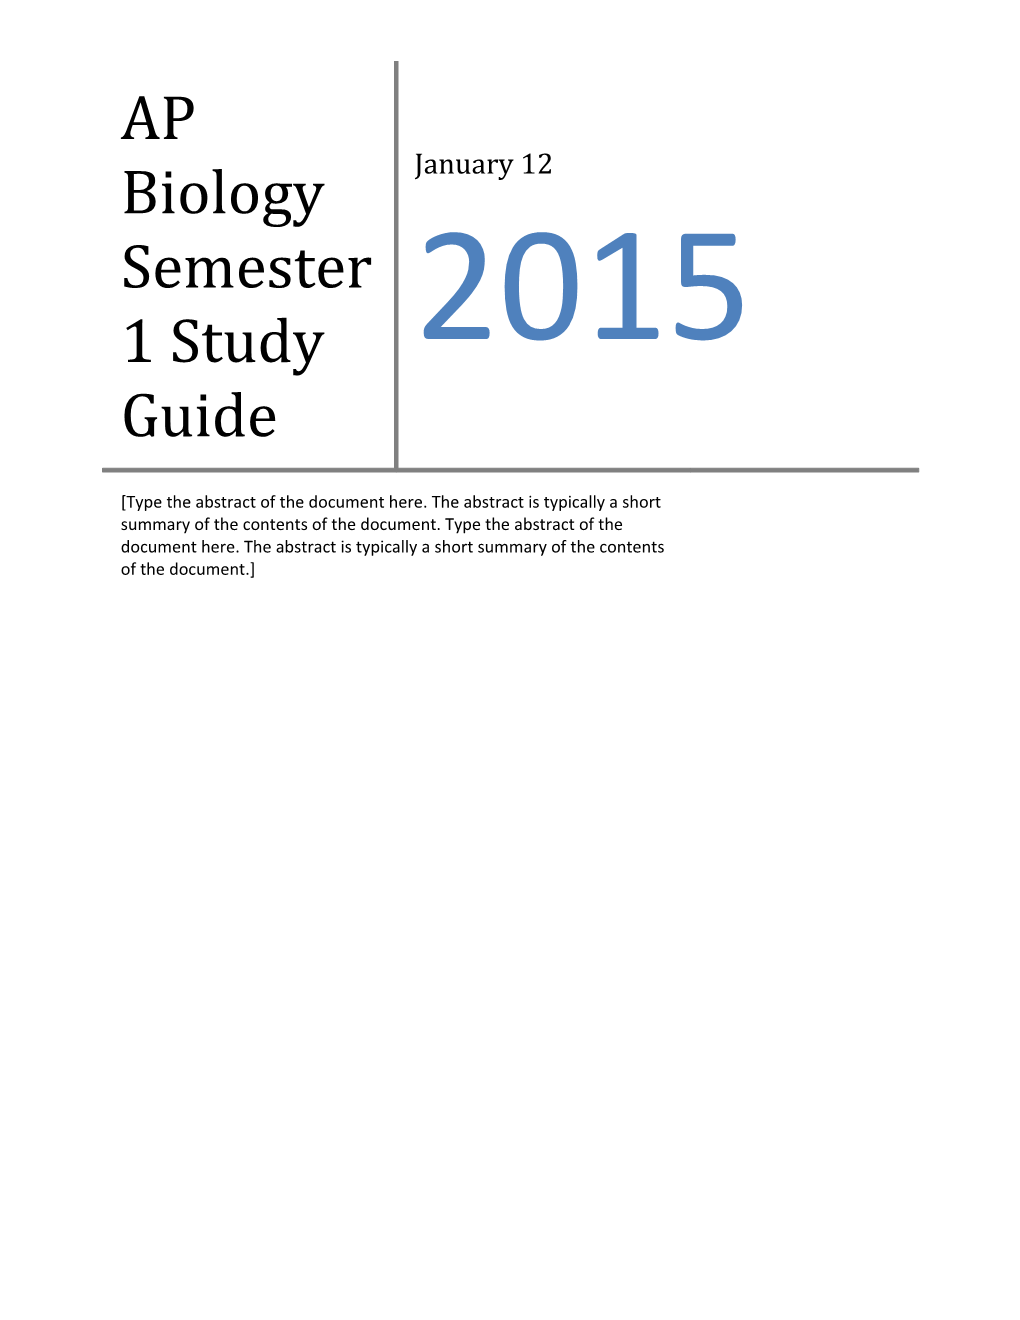 AP Biology Semester 1 Study Guide